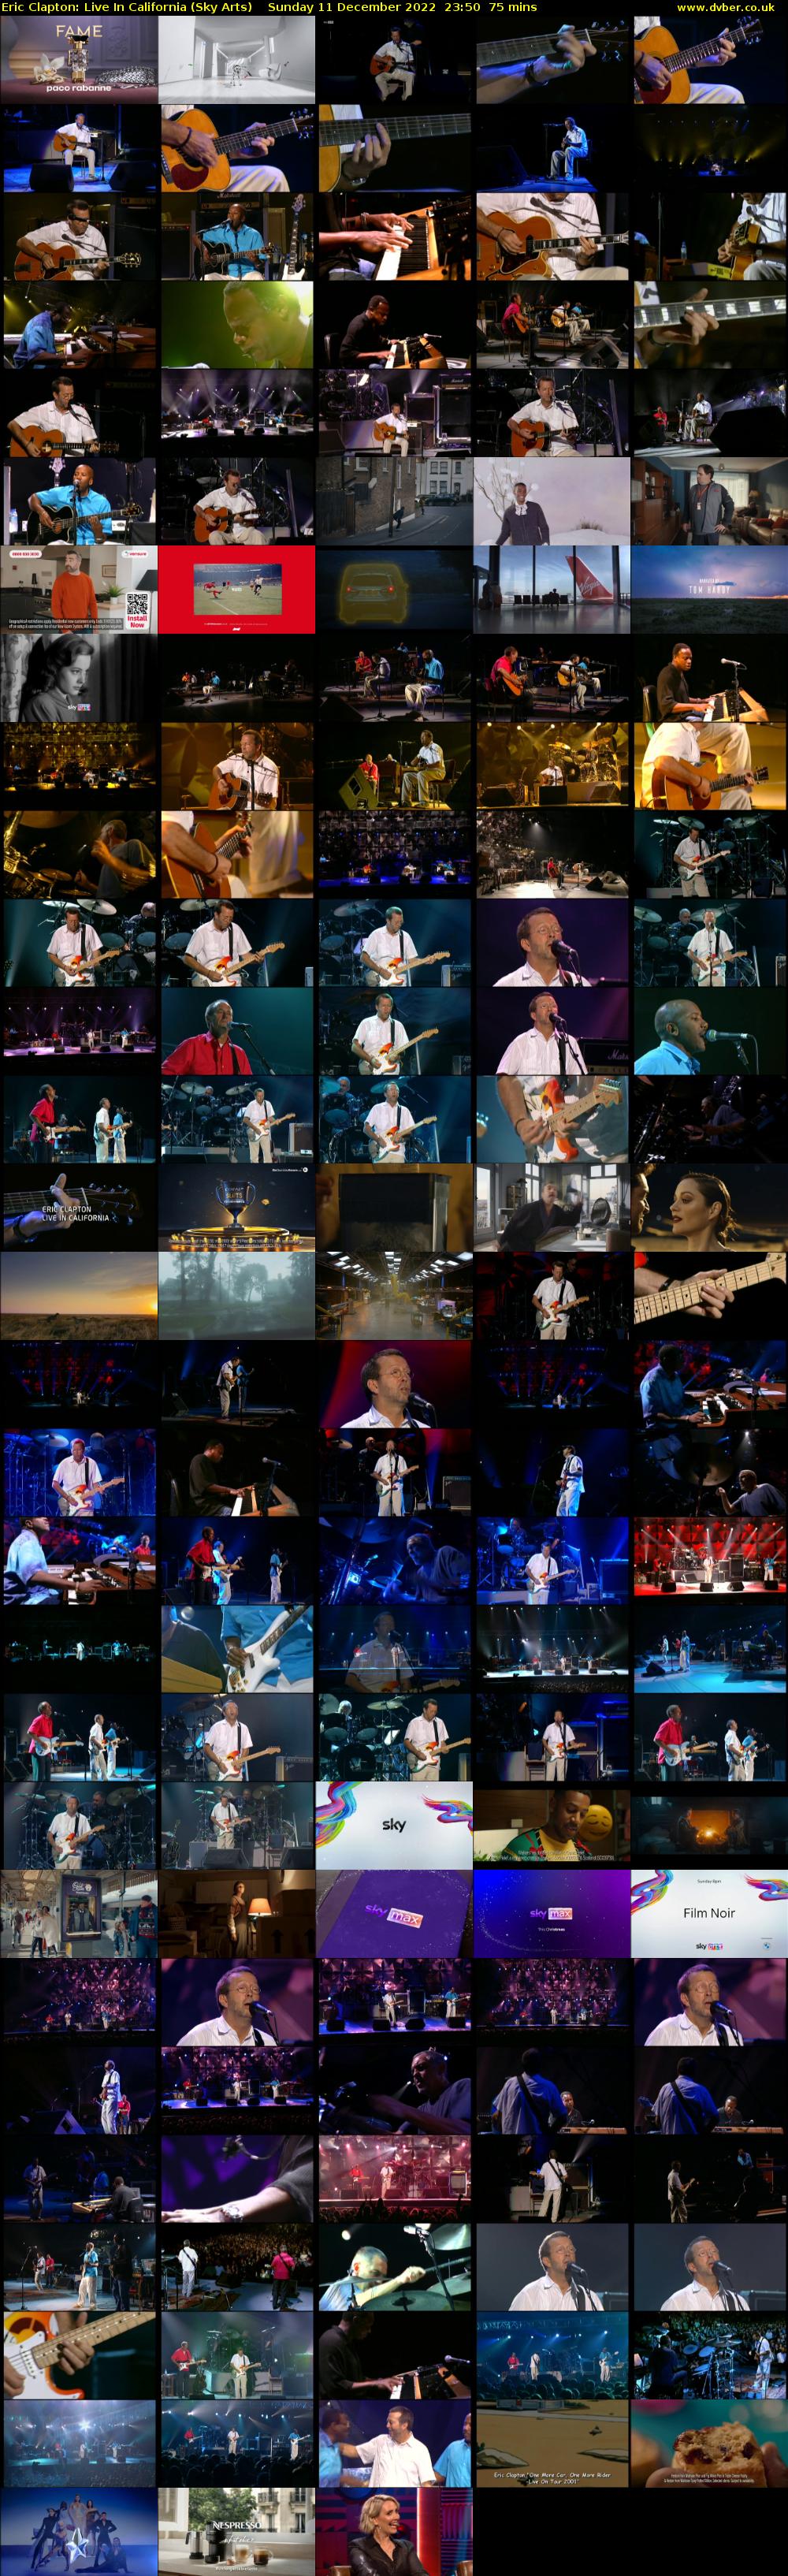 Eric Clapton: Live In California (Sky Arts) Sunday 11 December 2022 23:50 - 01:05